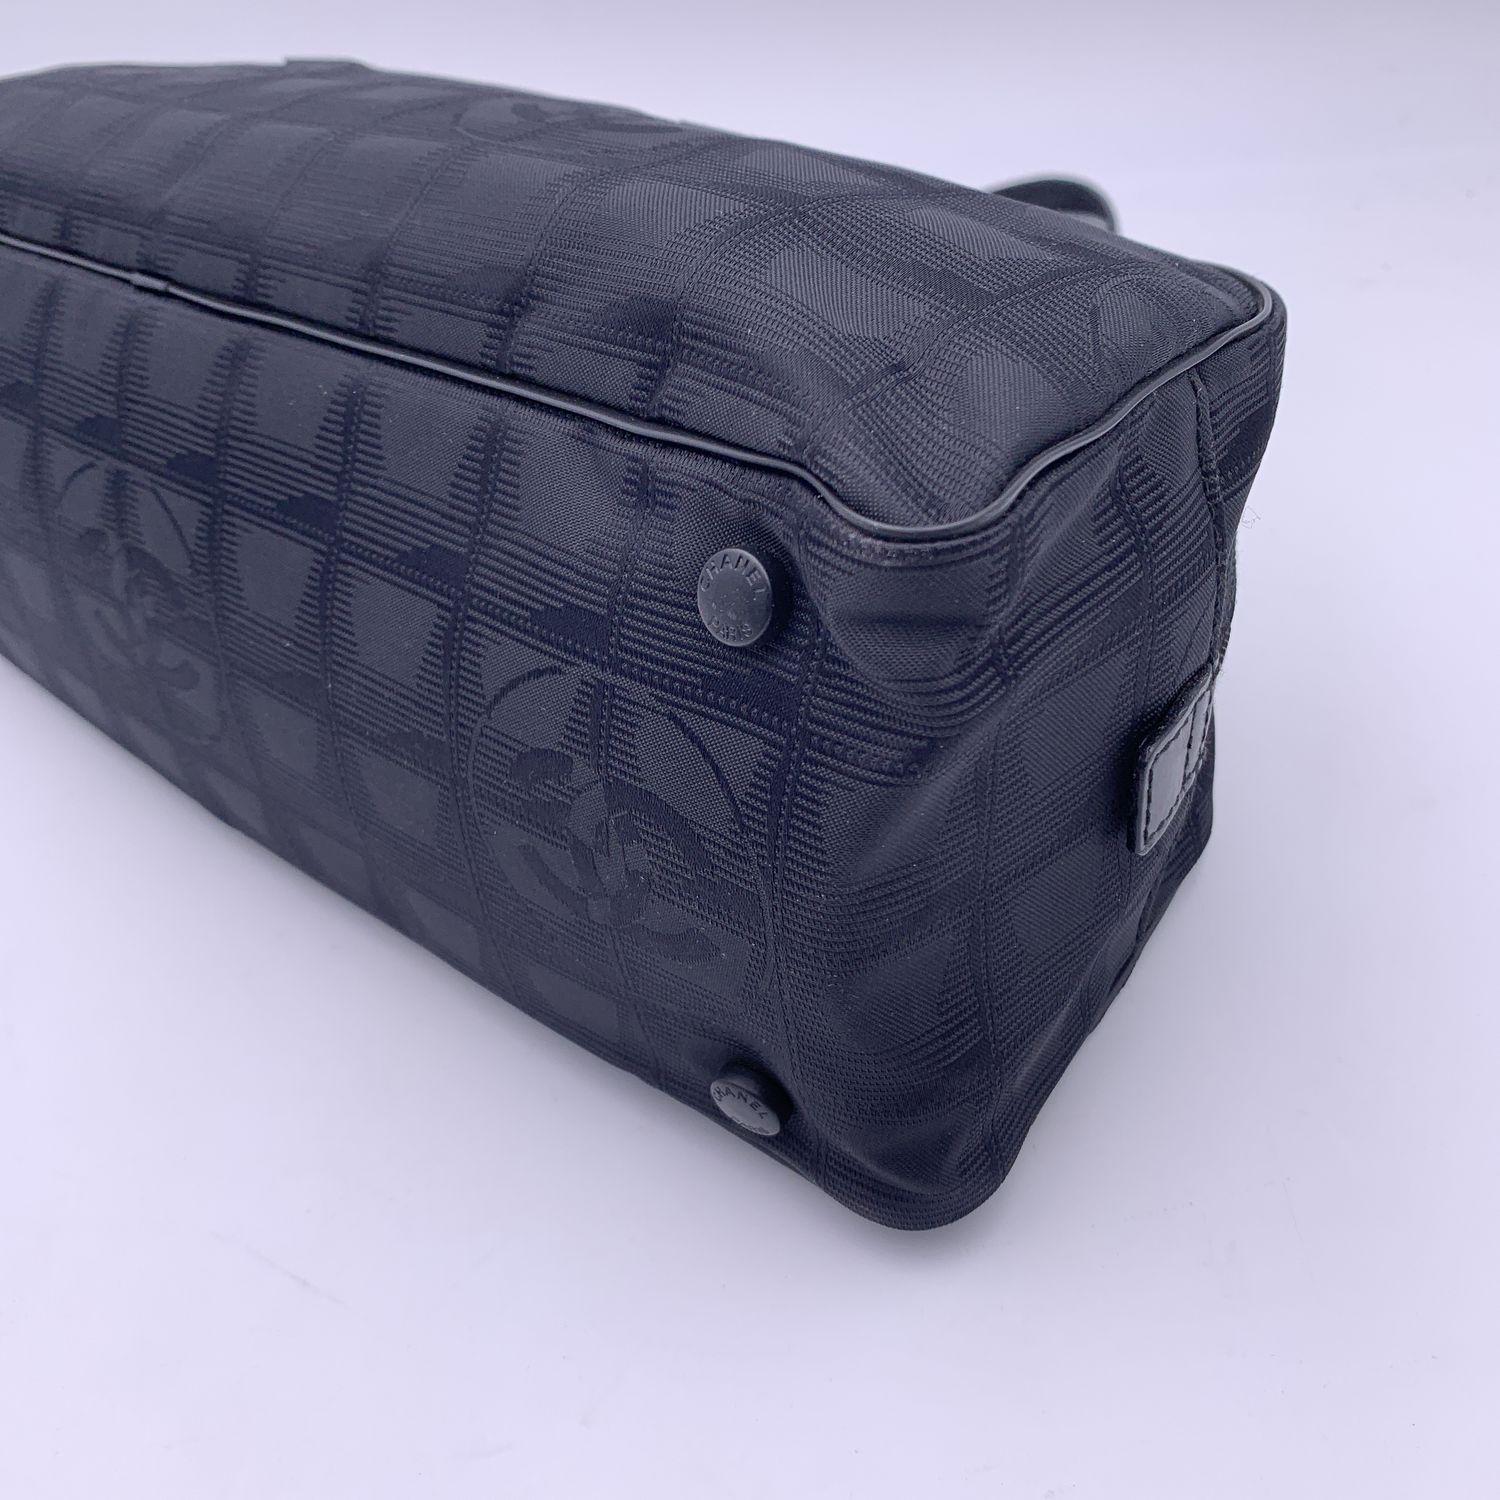 Chanel Black Nylon Travel Line Bassotto Top Handle Bag 3